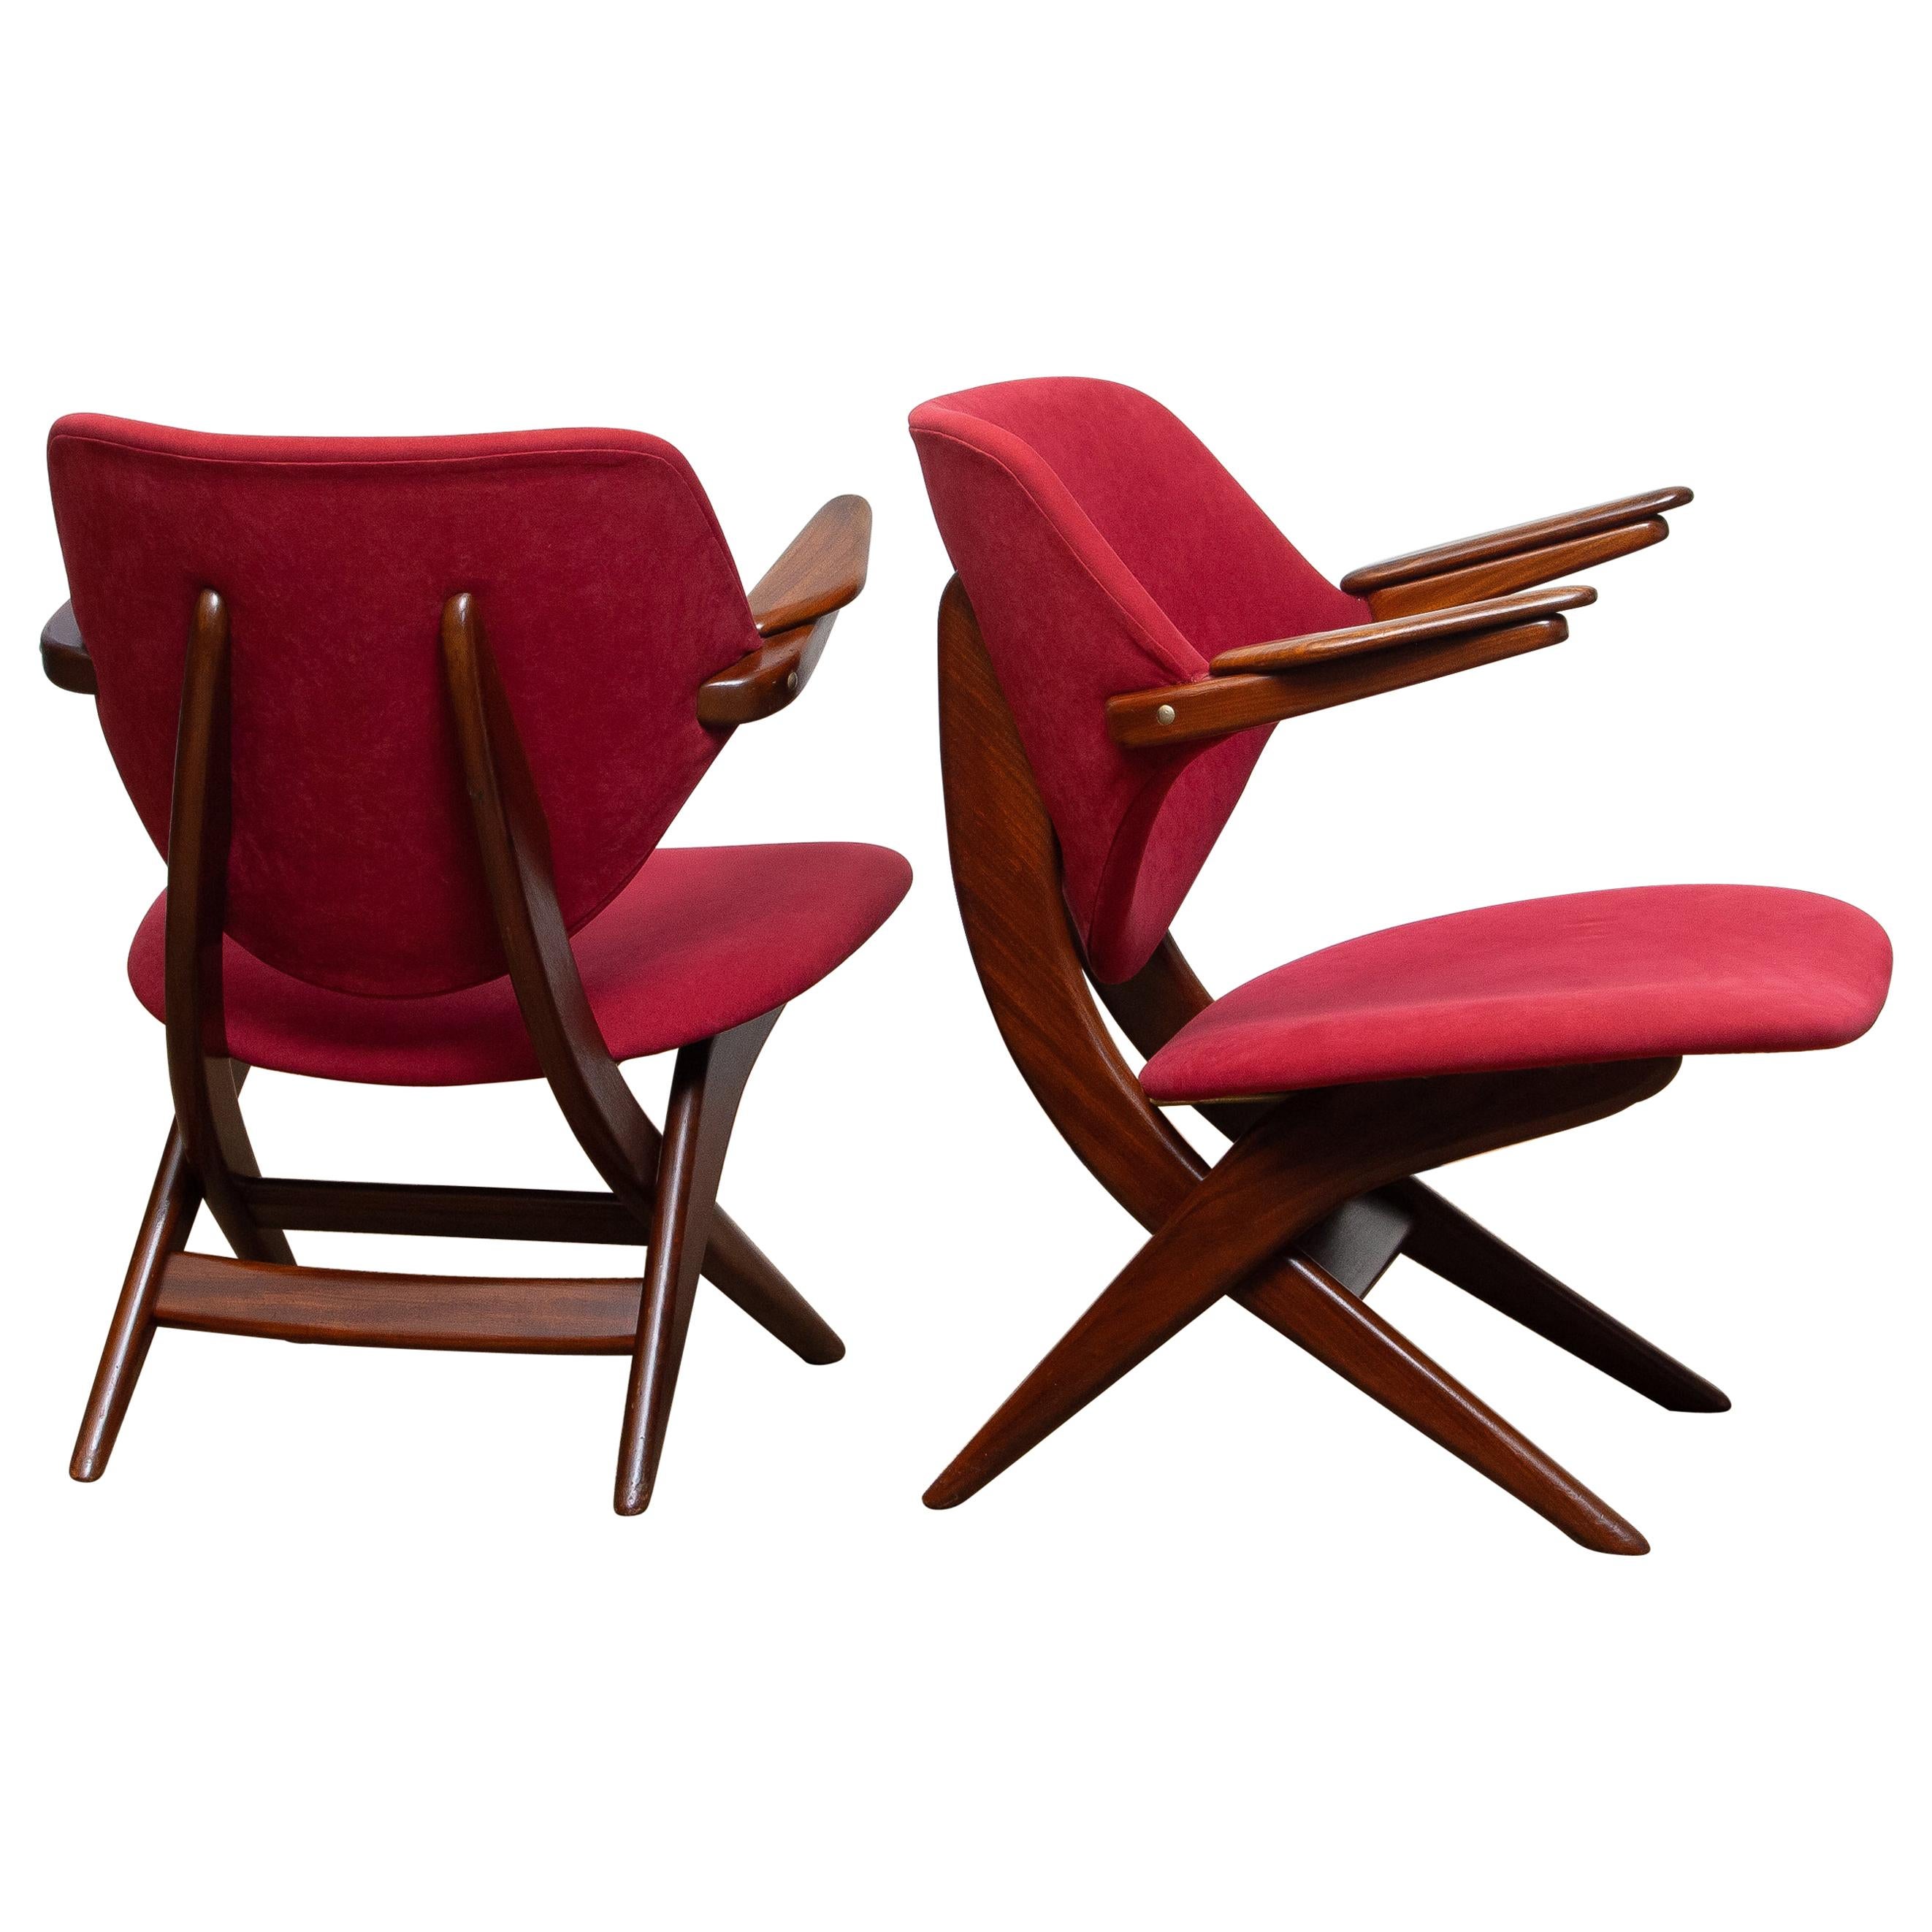 1950s, Set of Two Teak Lounge/Easy Chairs by Louis Van Teeffelen for Wébé